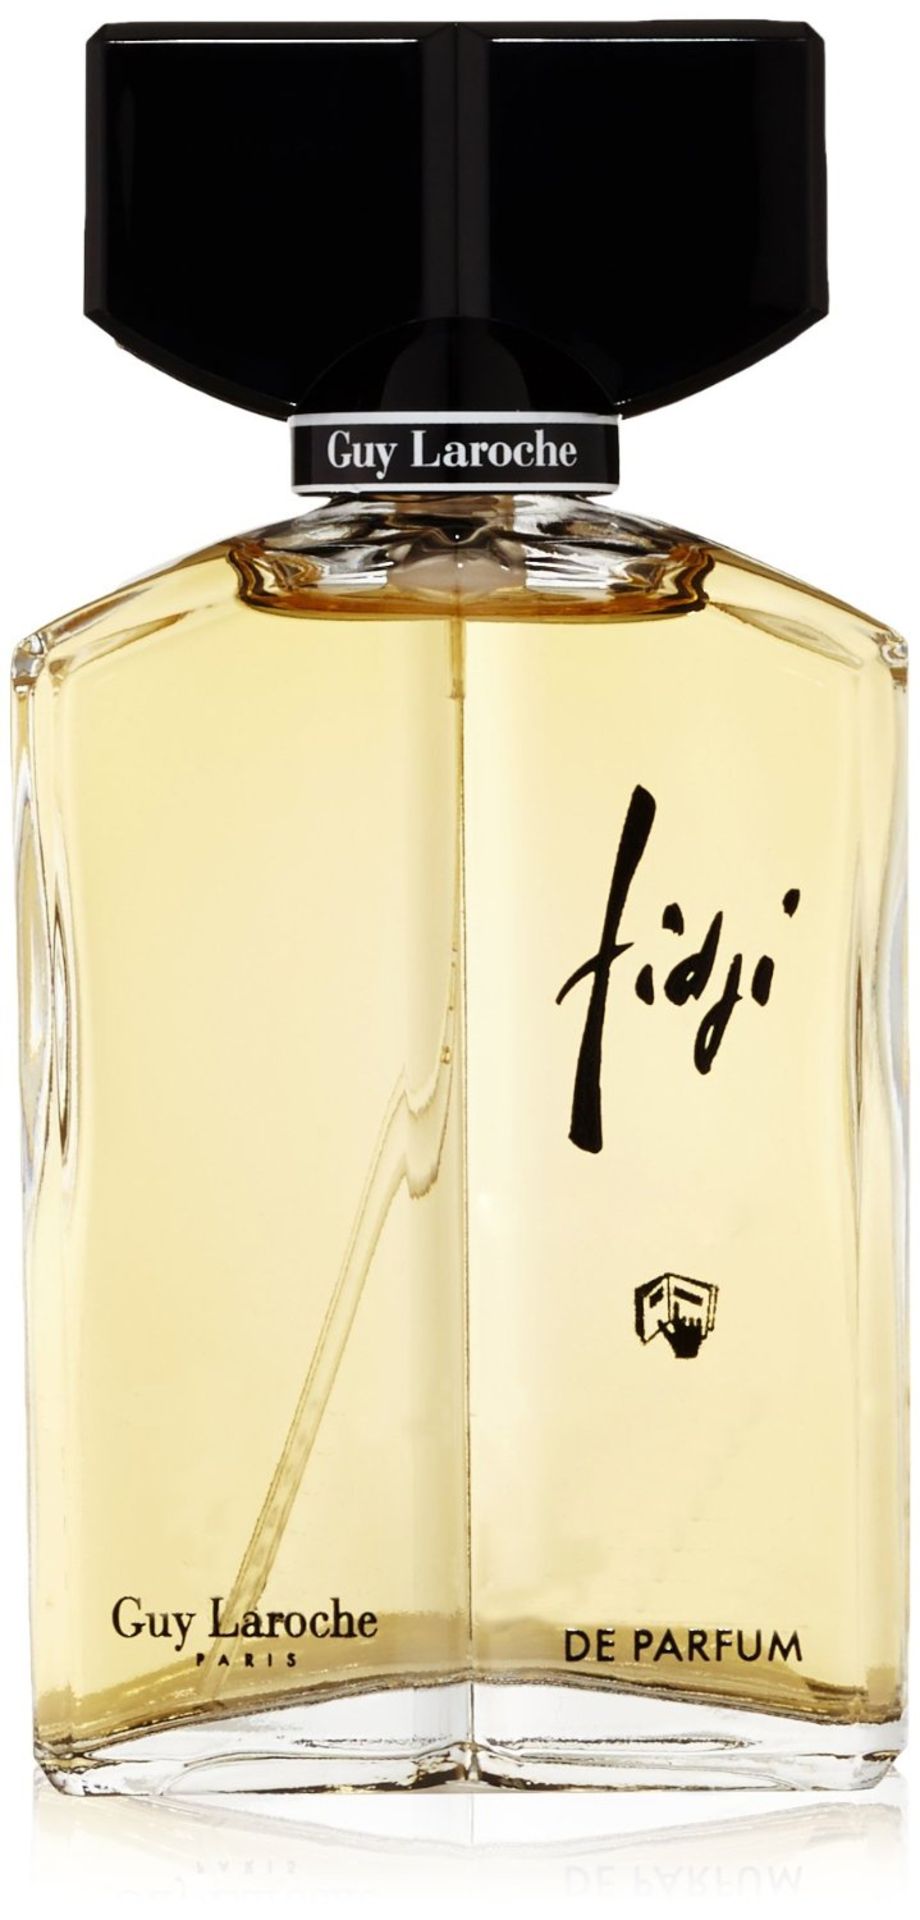 Guy Laroche Fidji Eau De Parfum 50ml_ Another great and unique PERFUME_RRP £69.00_Brand new, - Image 2 of 4